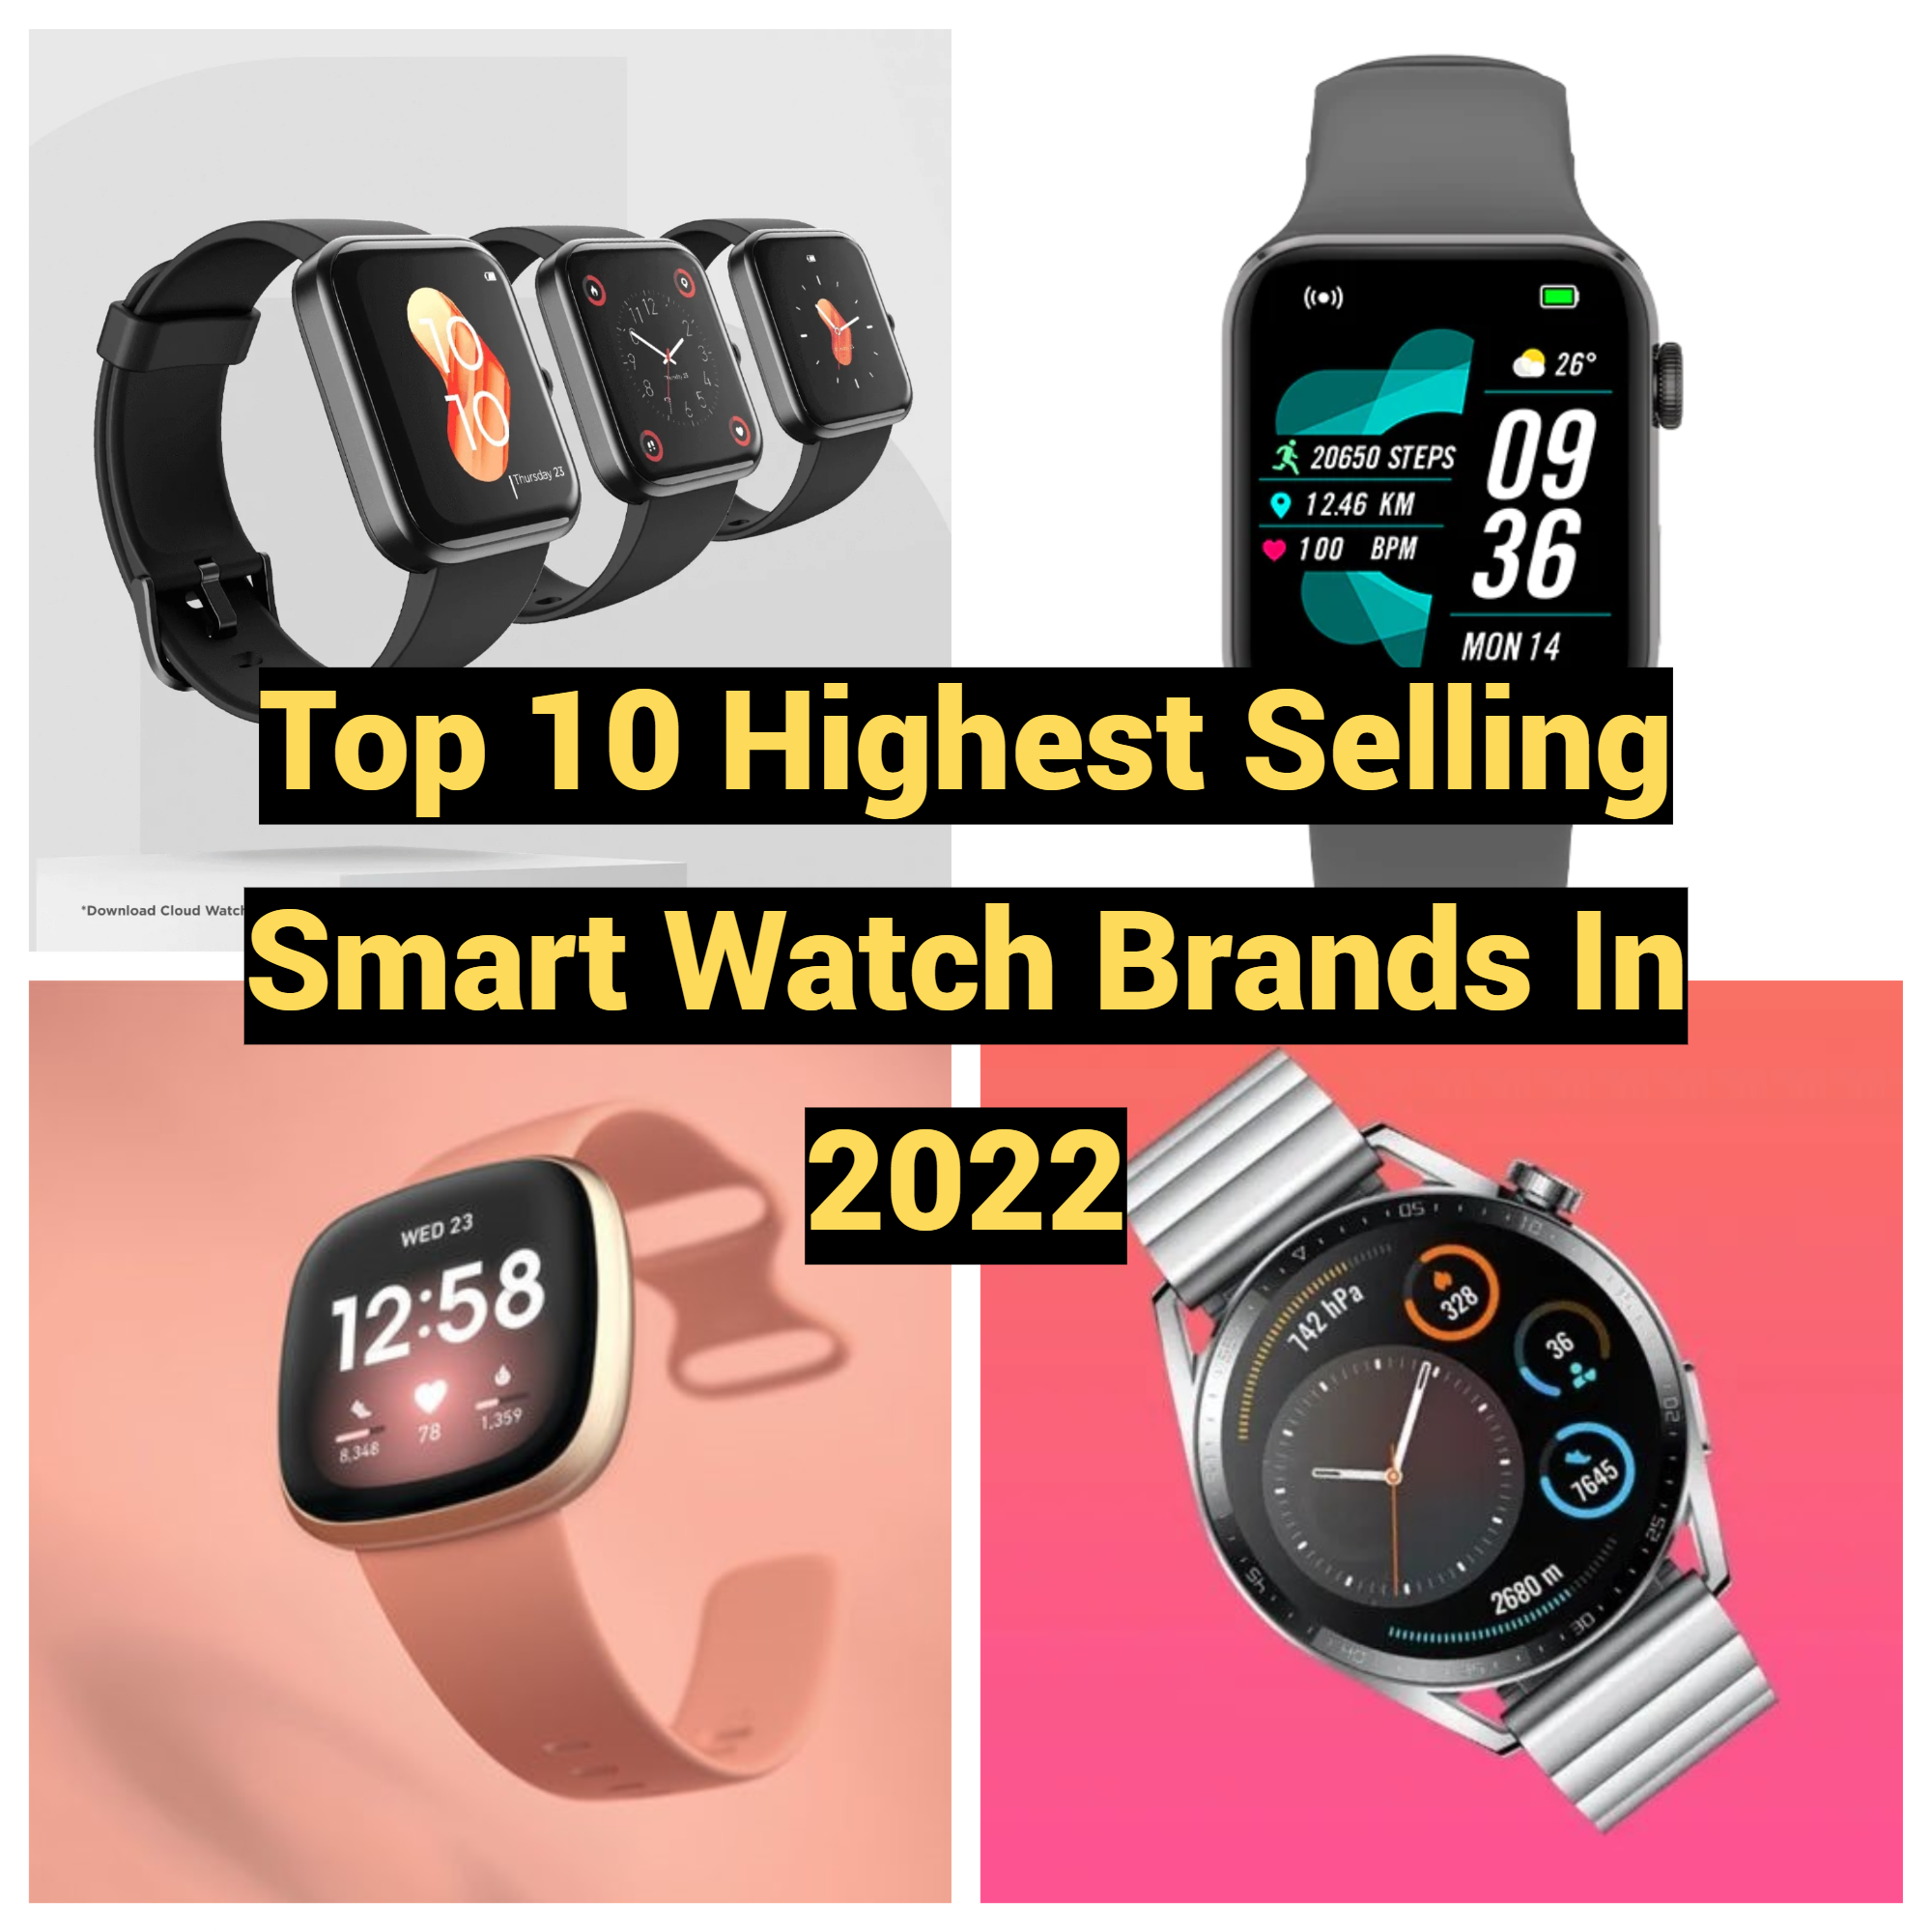 Top 10 Highest Selling Smart Watch Brands In 2022